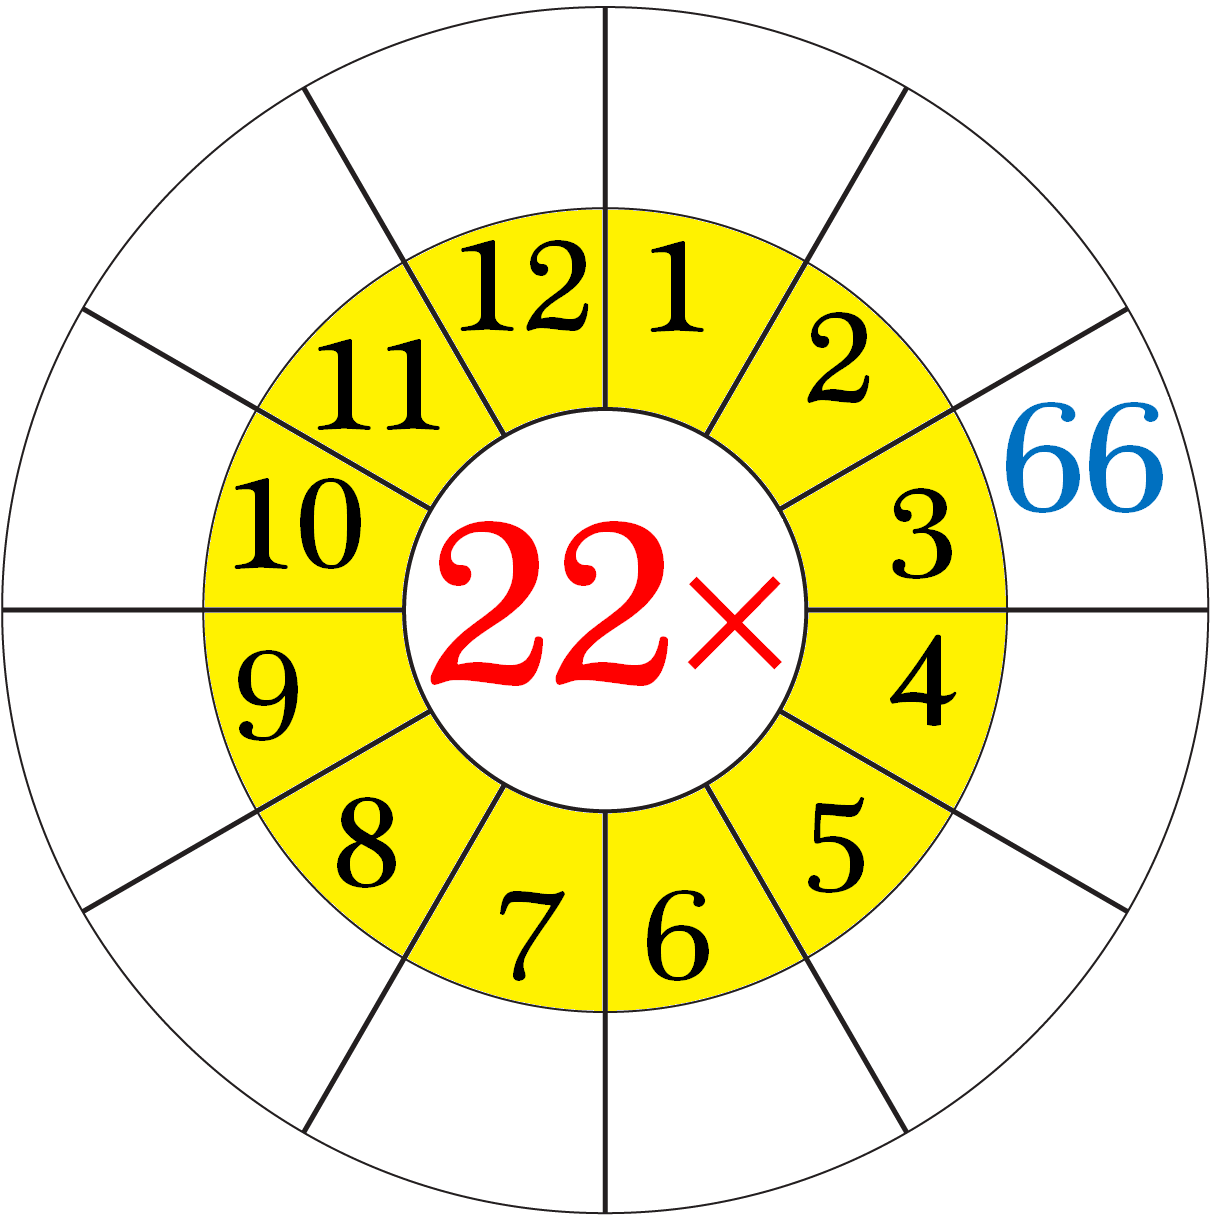 Worksheet on Multiplication Table of 22